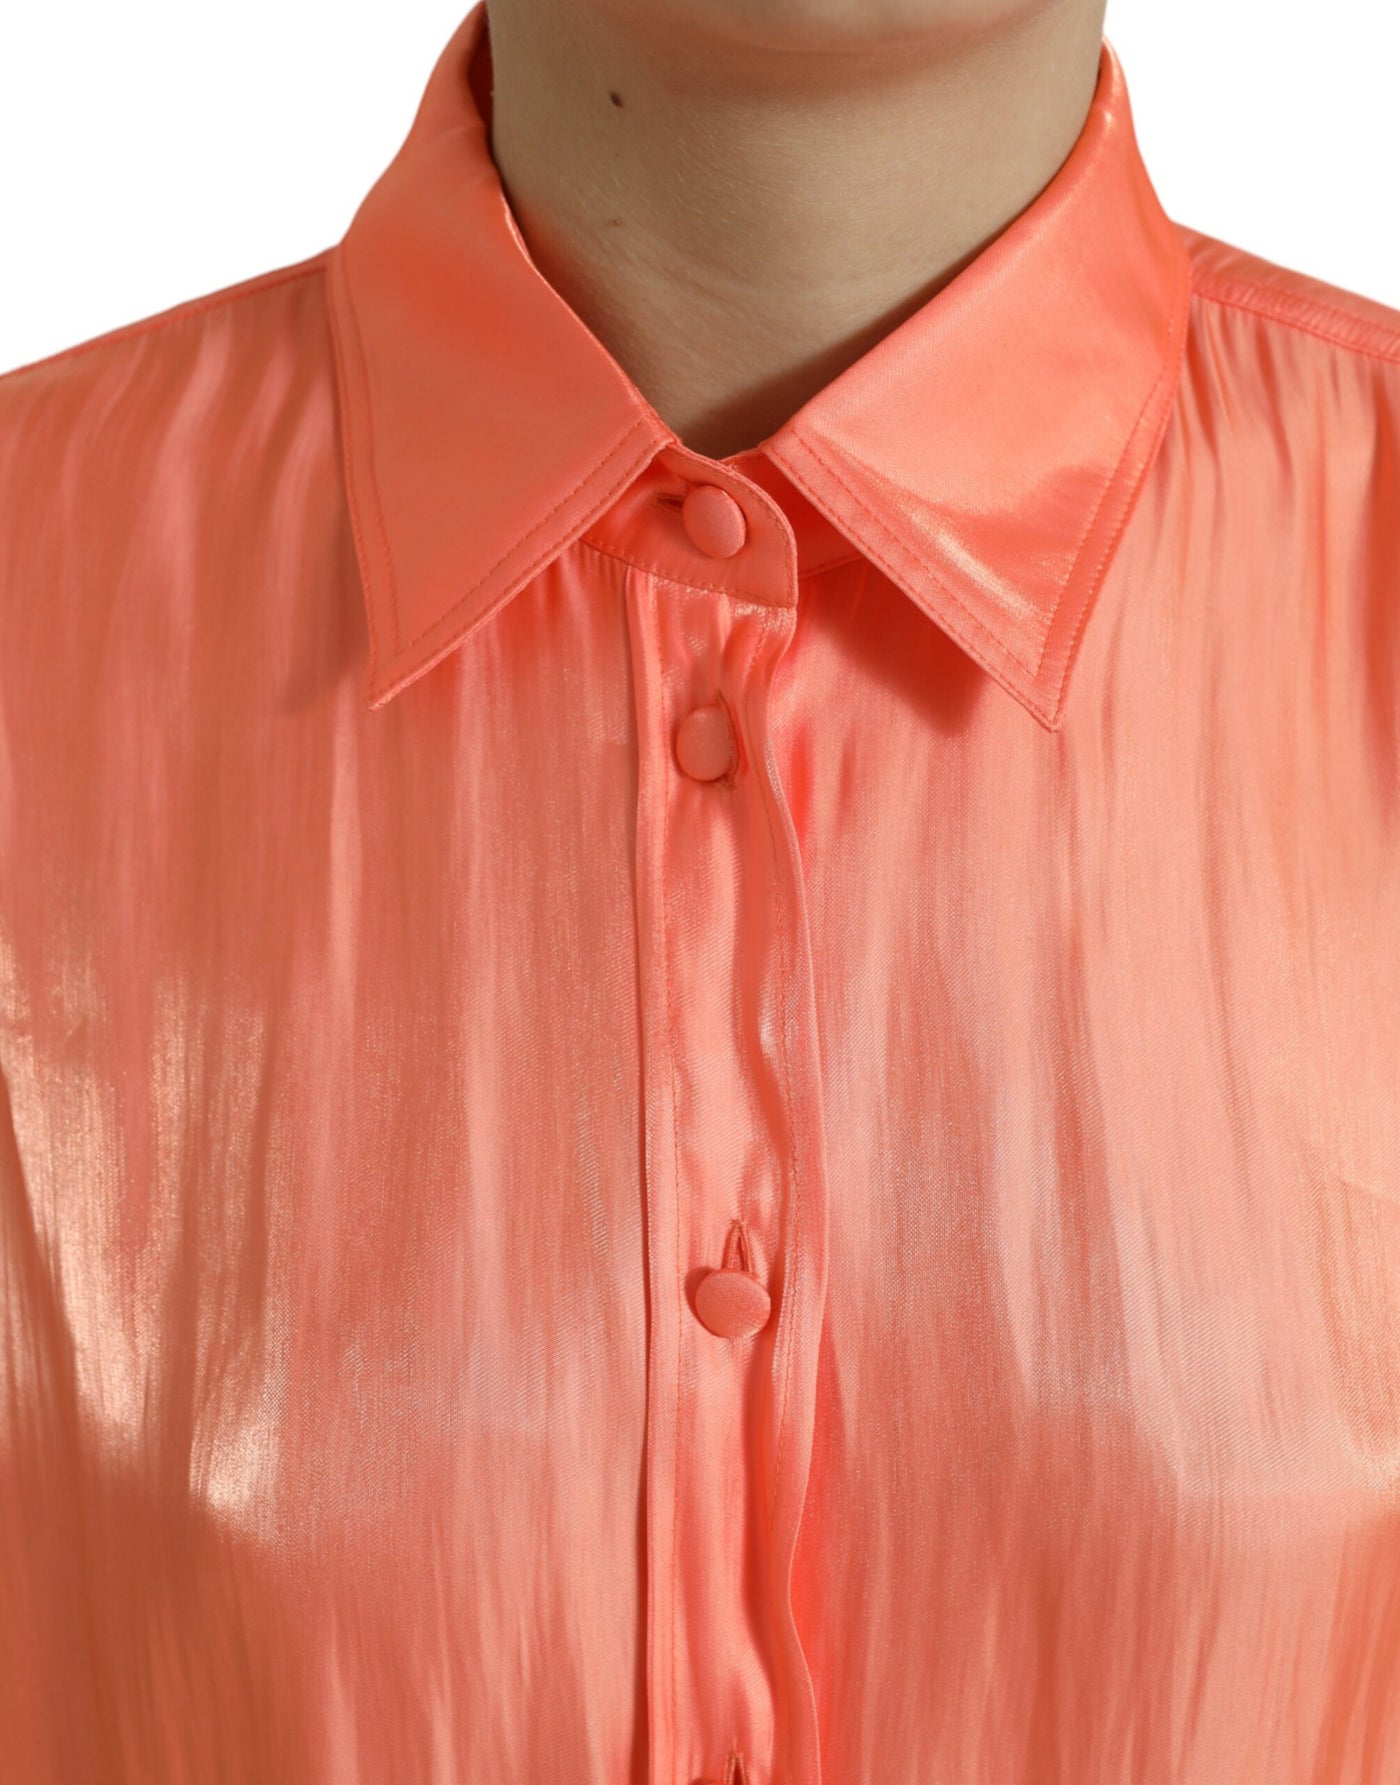 Dolce & Gabbana Peach Long Sleeve Button Down Blouse Top